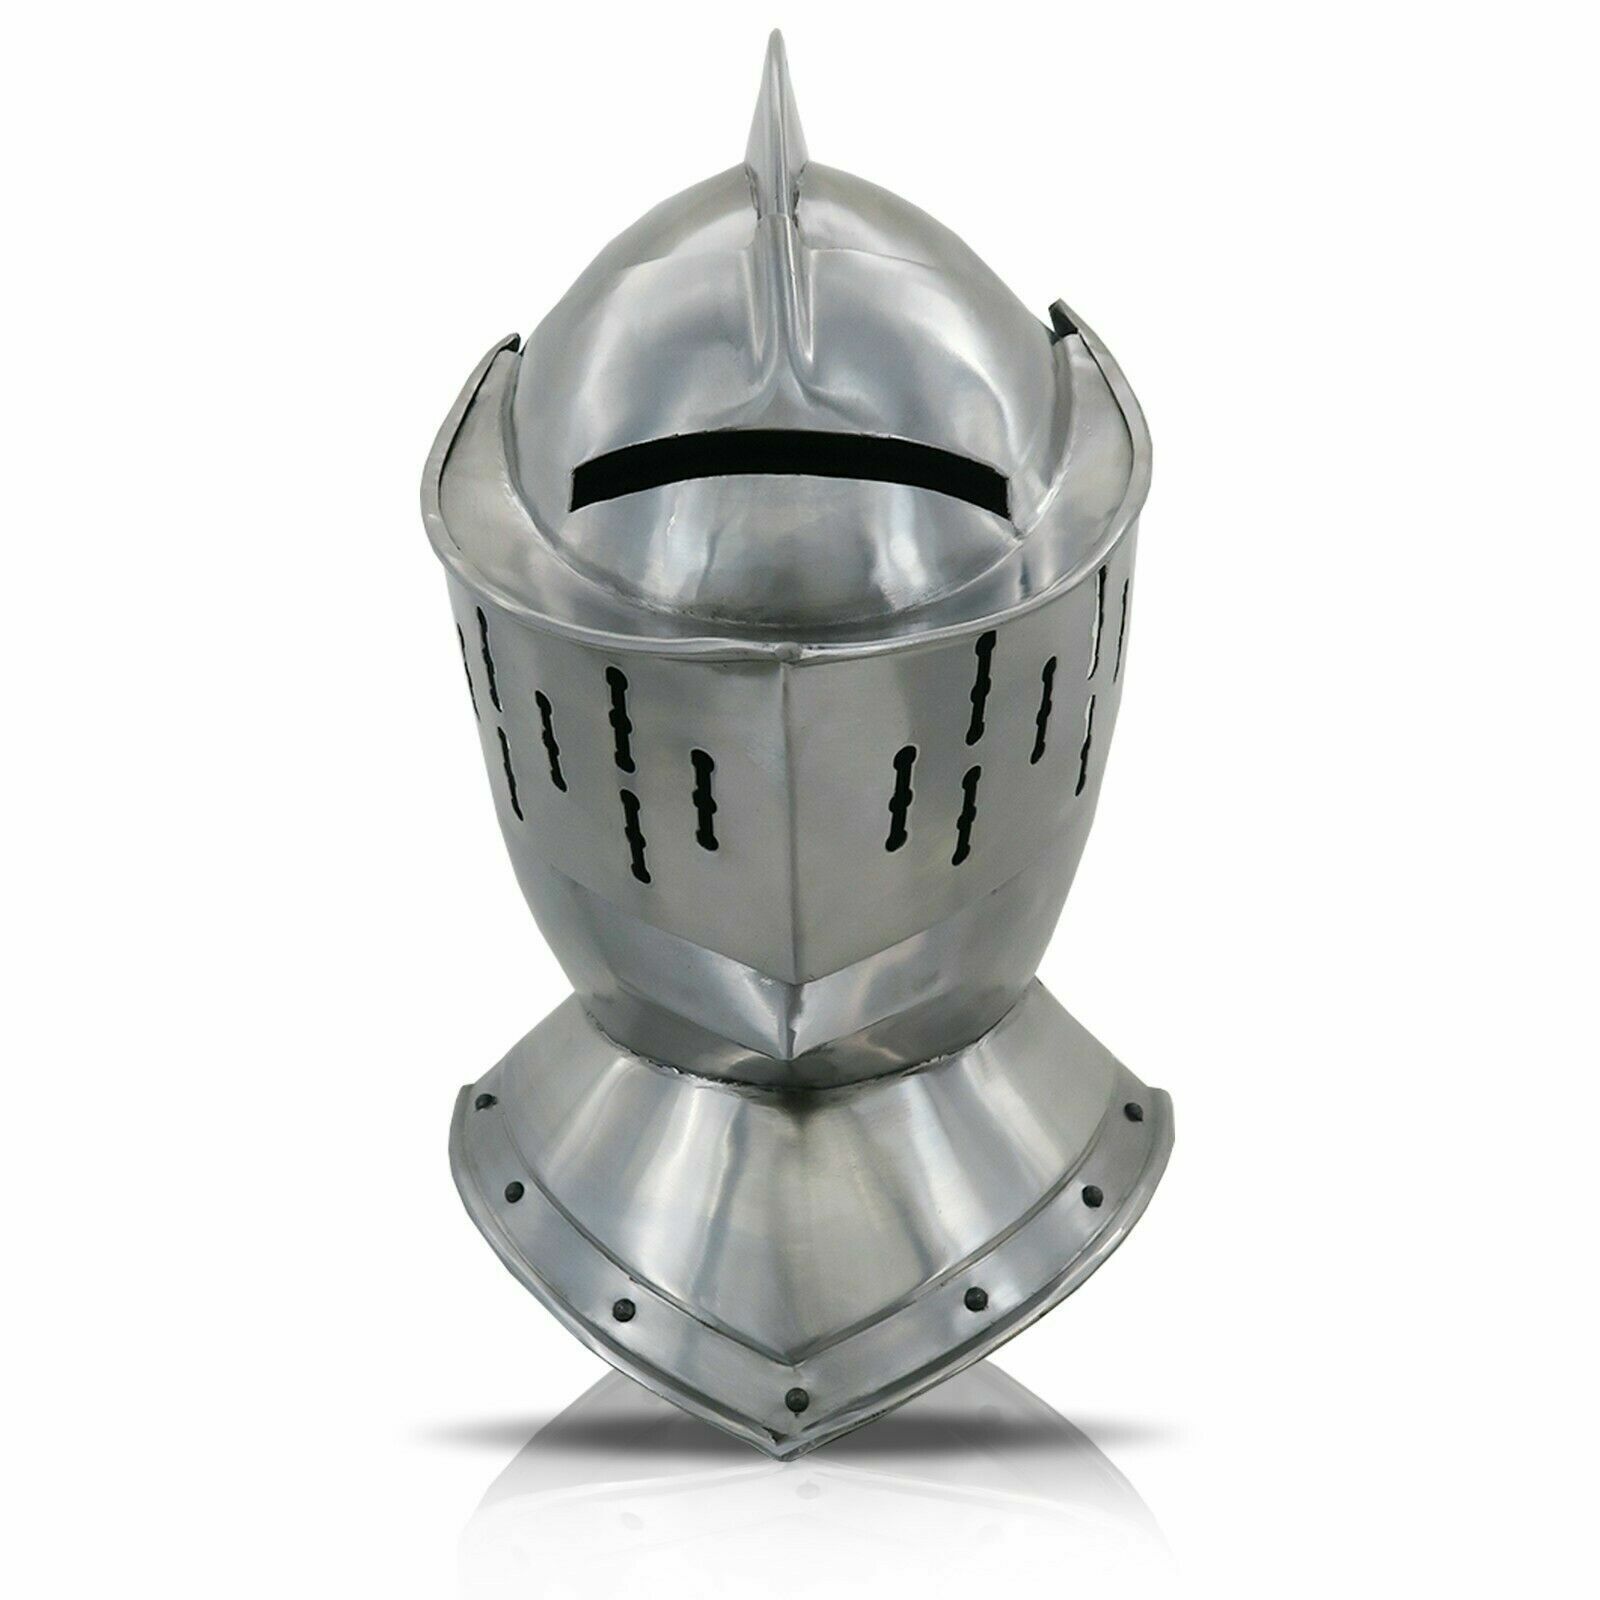 Close European Medieval Knight Armor Helmet, décor best look new handmade gift 